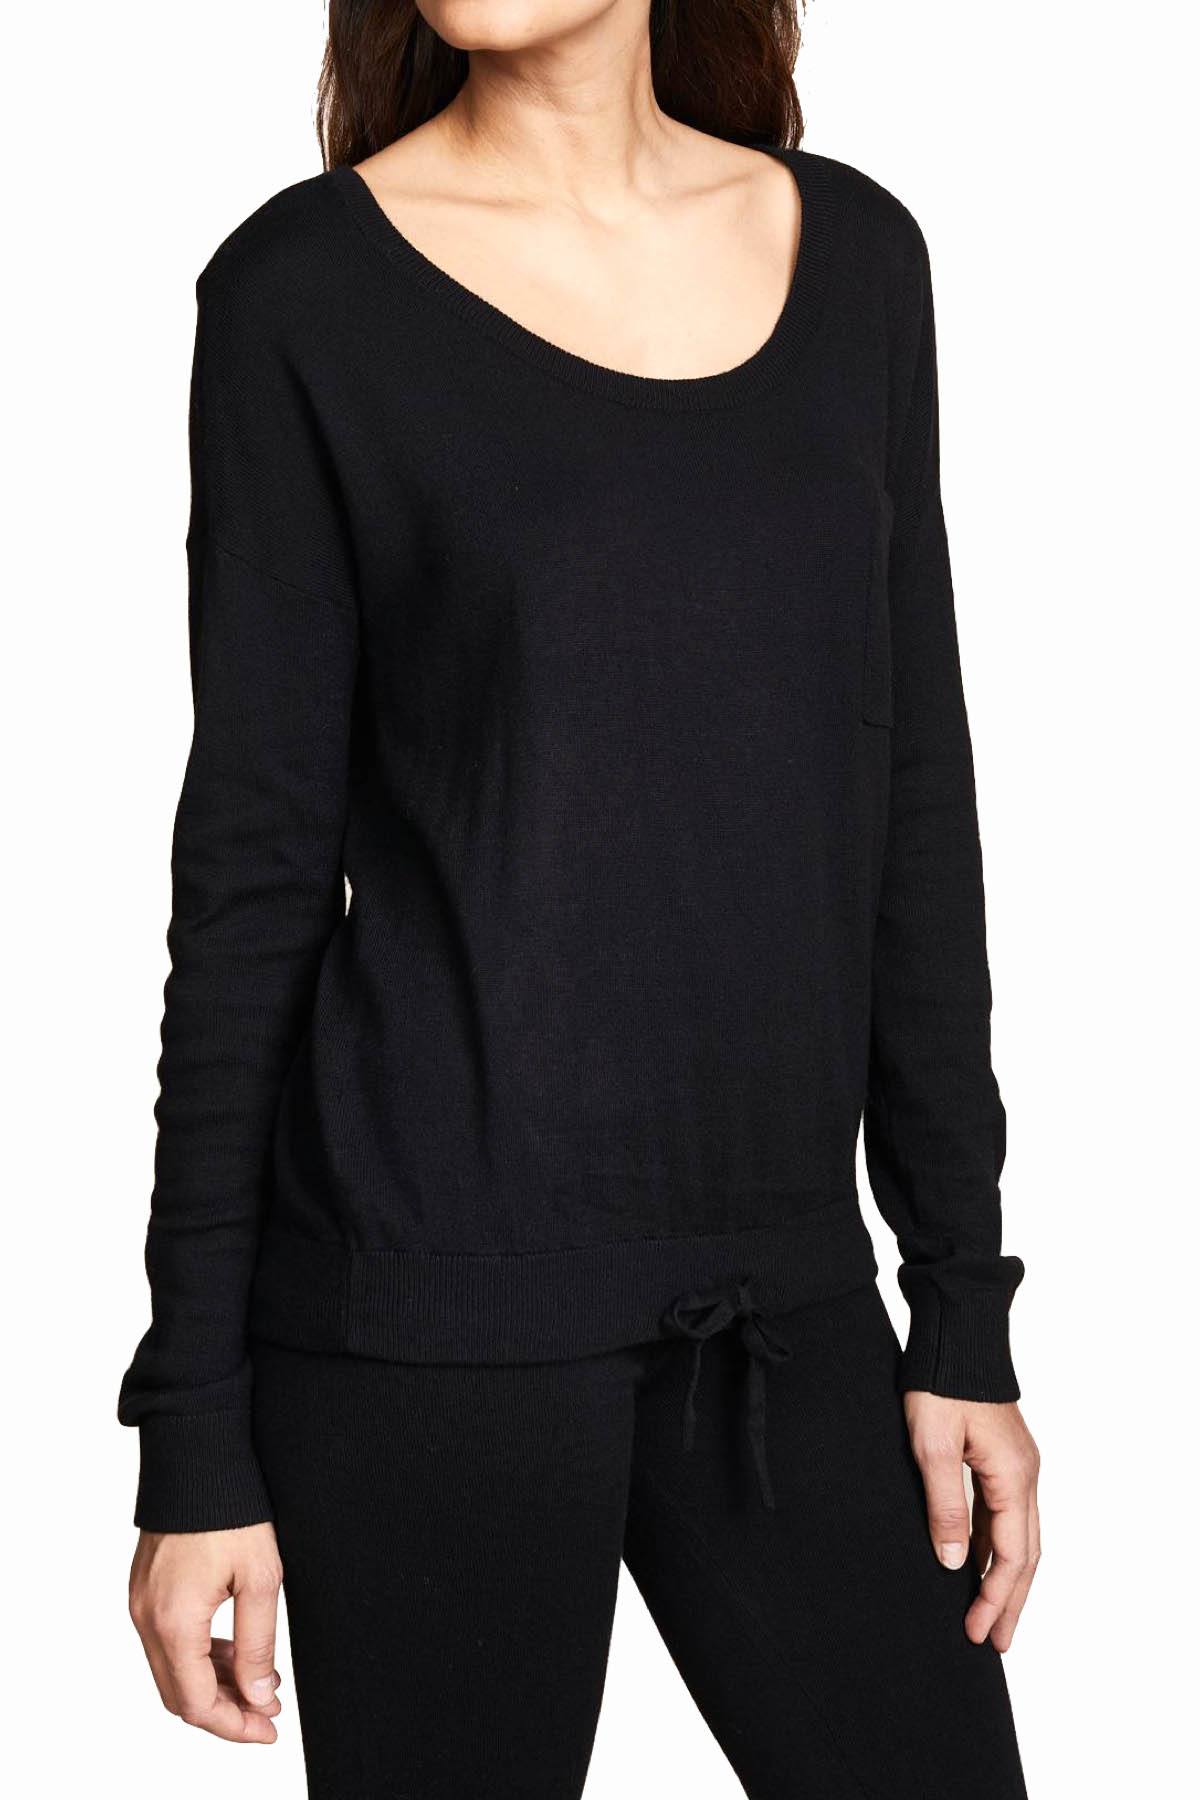 Calvin Klein Sleepwear Black Pure-Knits Long-Sleeve Lounge Top